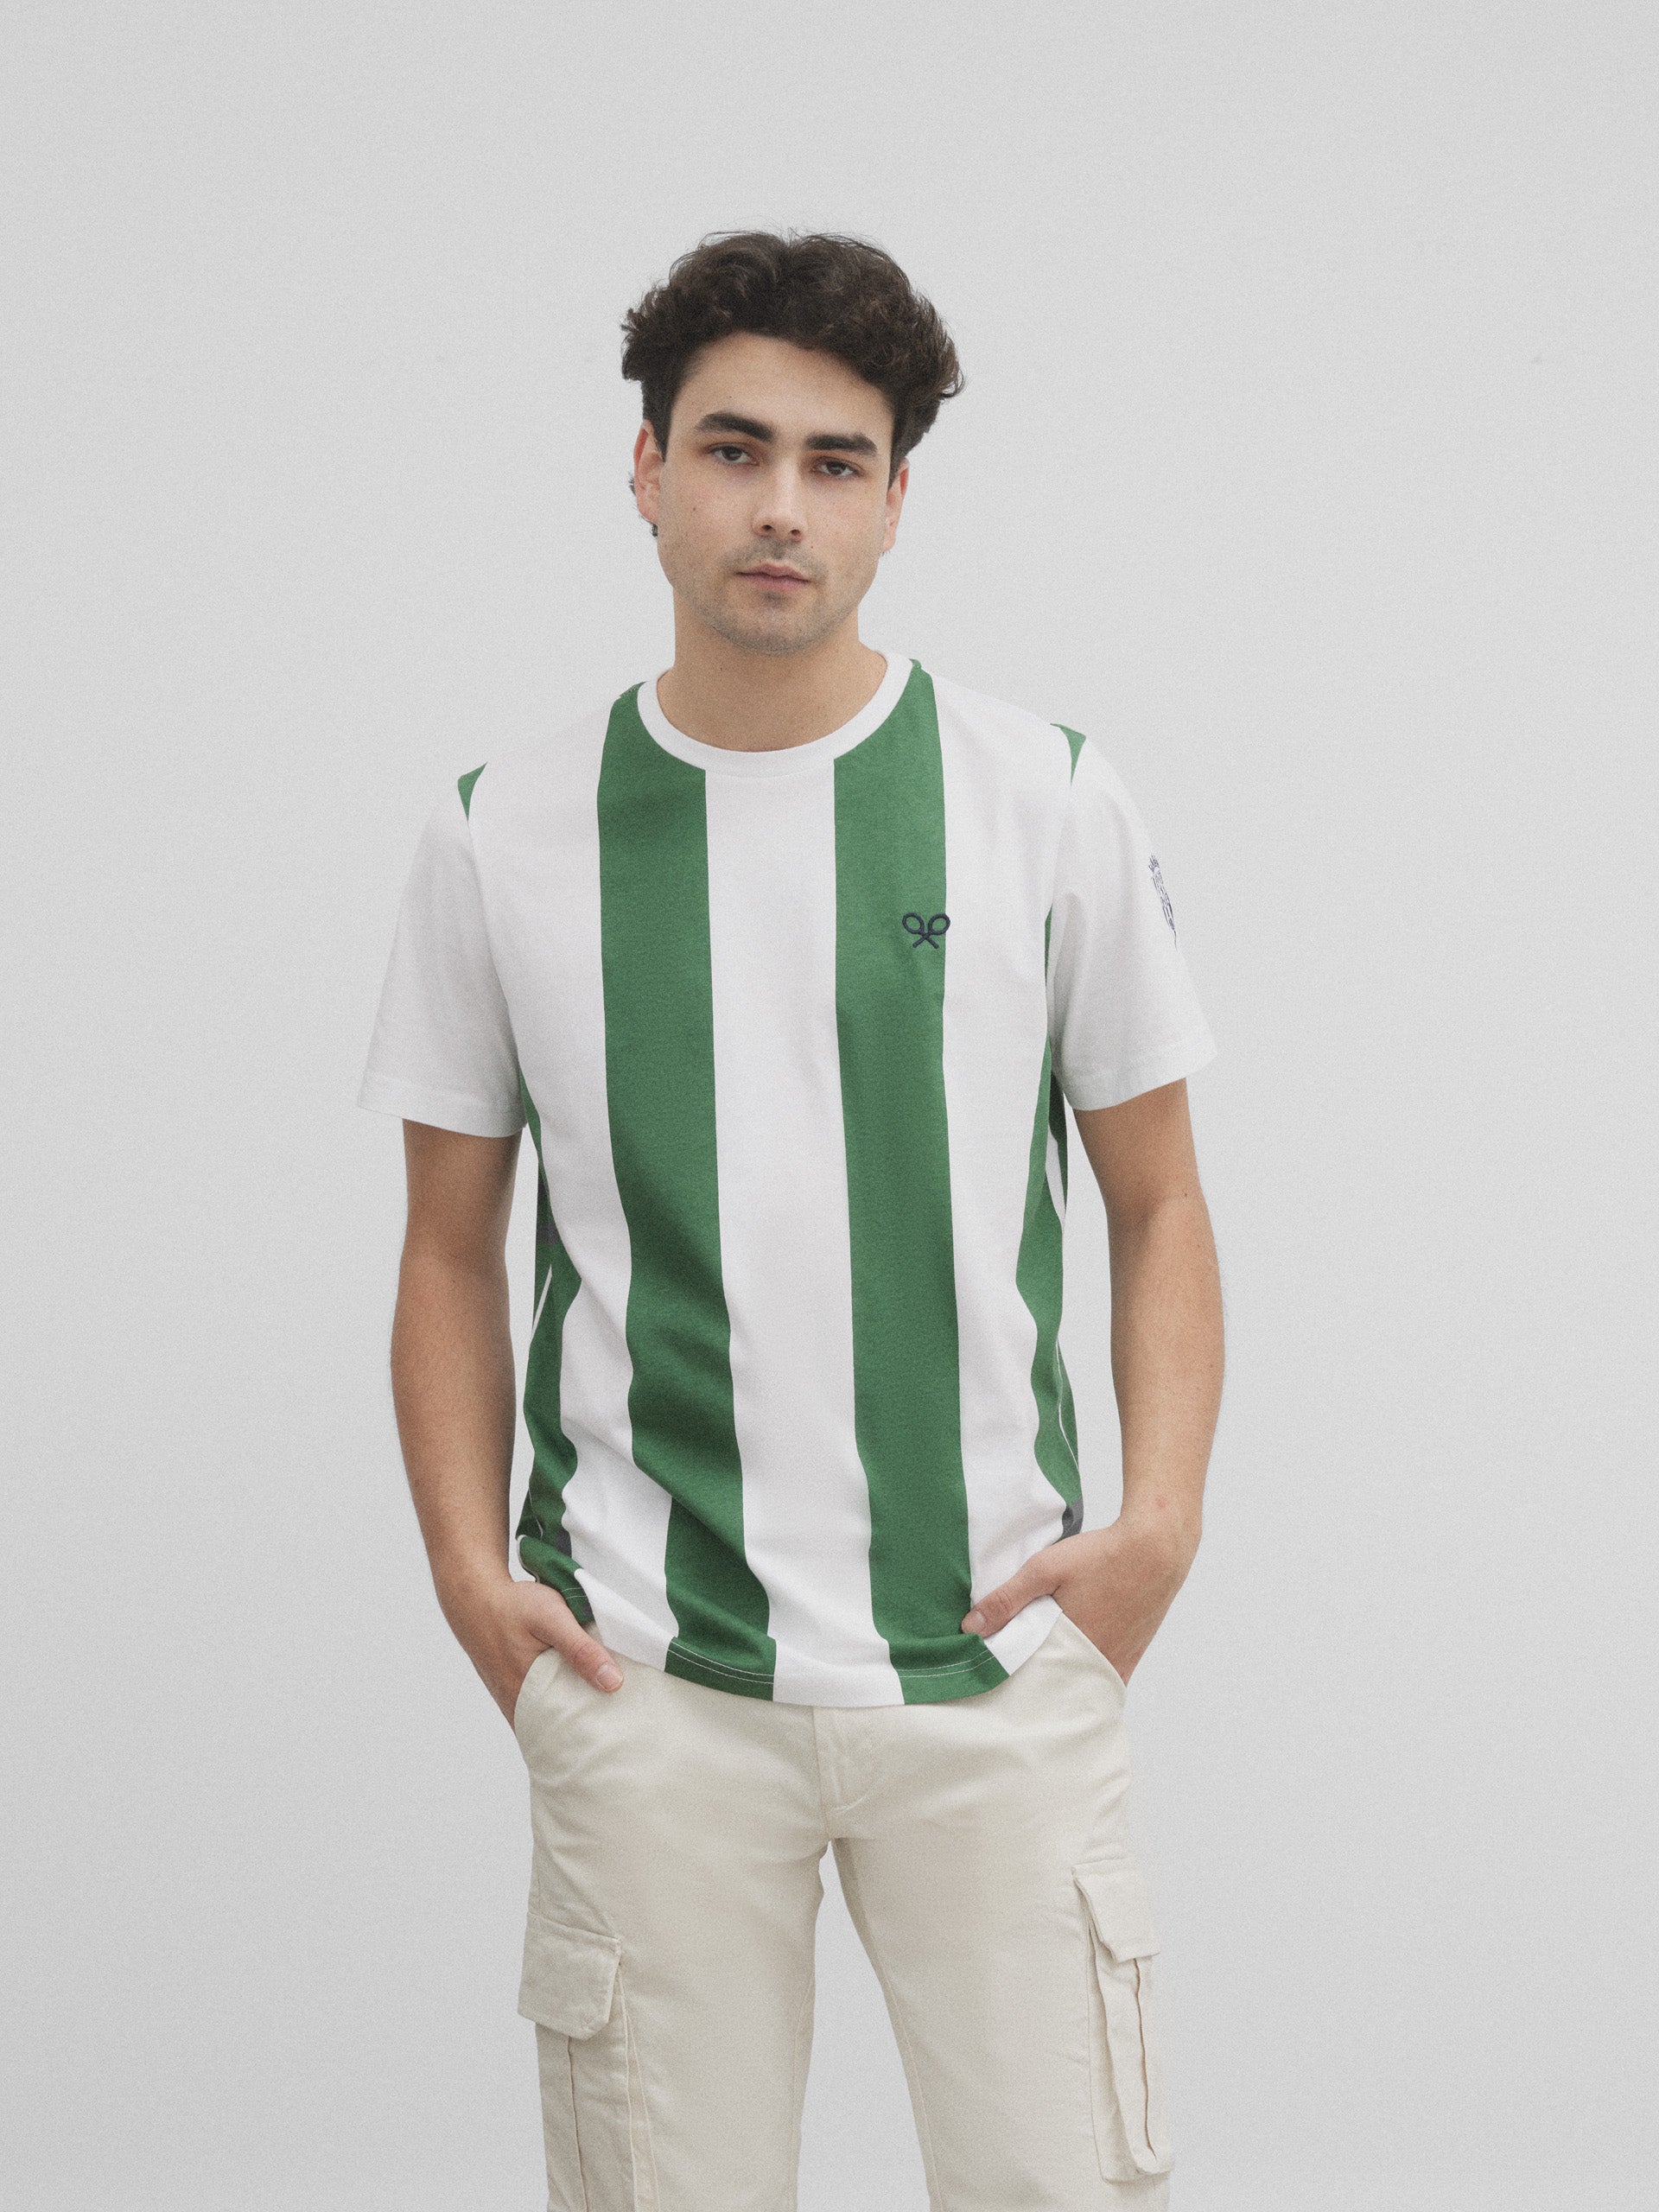 Retro white and green silbon t-shirt